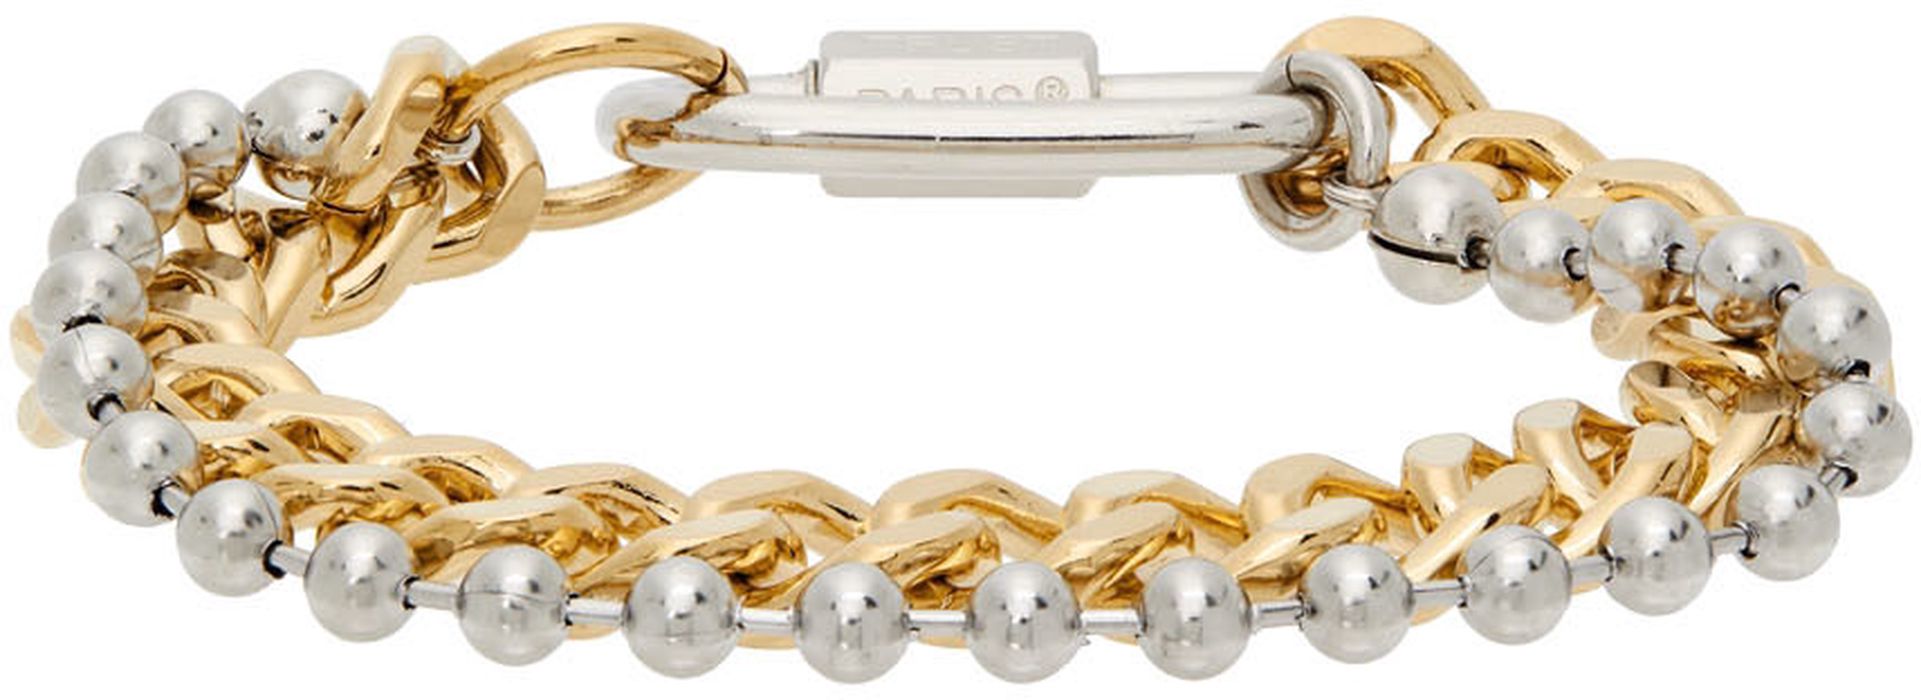 IN GOLD WE TRUST PARIS Gold & Silver Link Bracelet